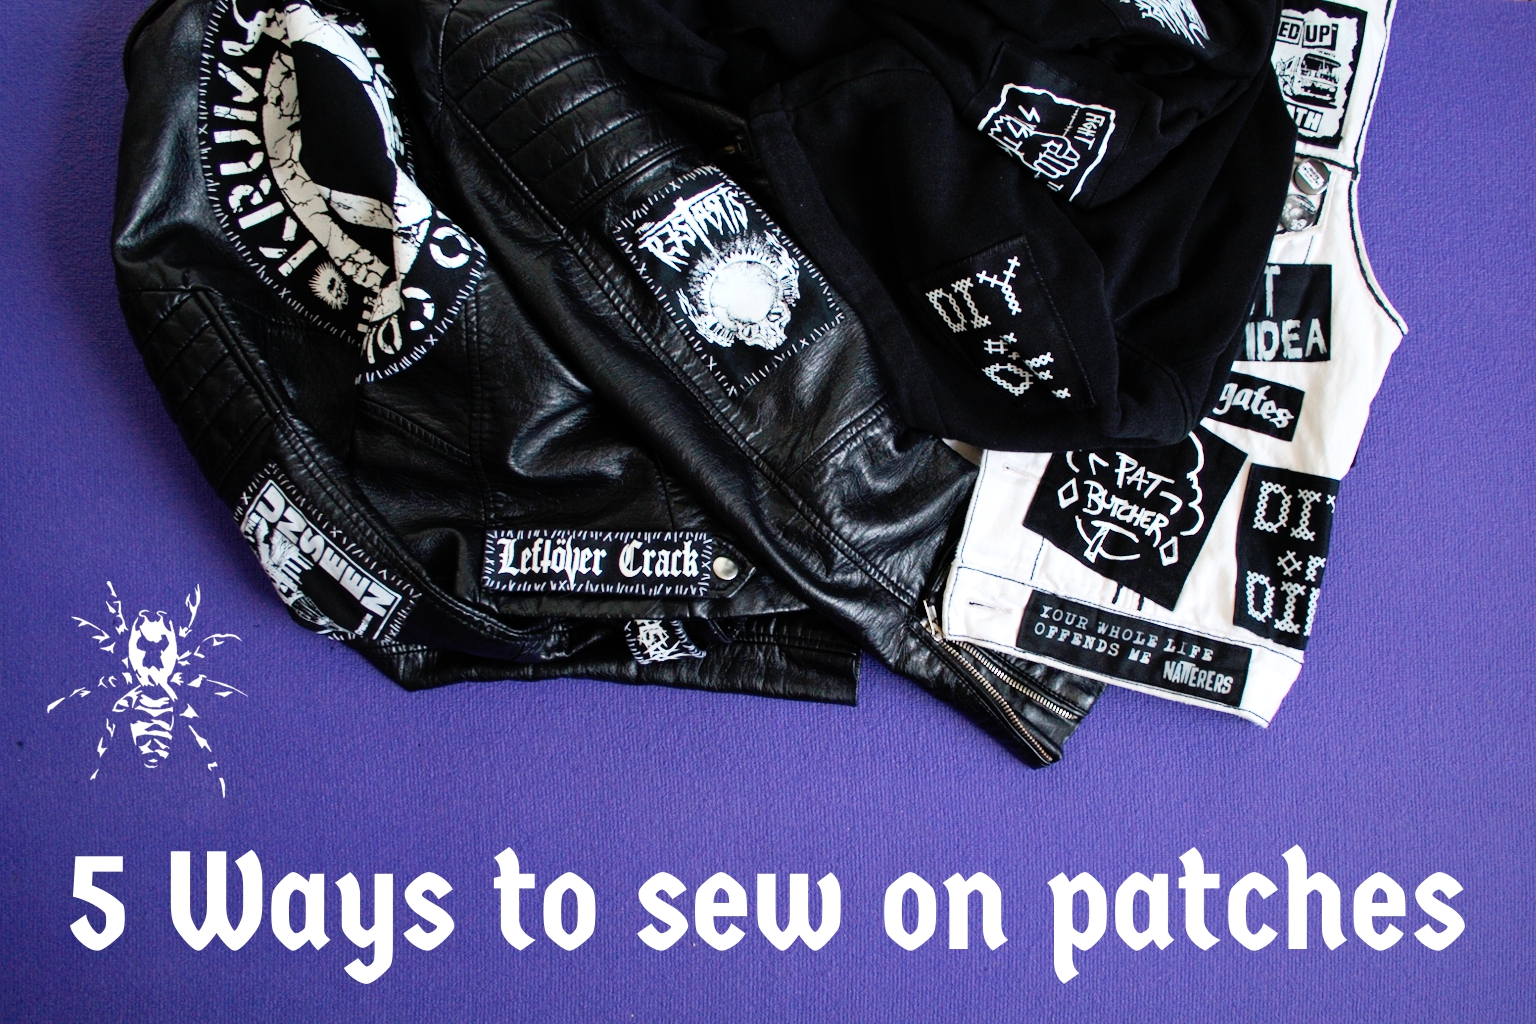 5 ways to sew on patches - Zebraspider Anti-Fashion - as dark, eco